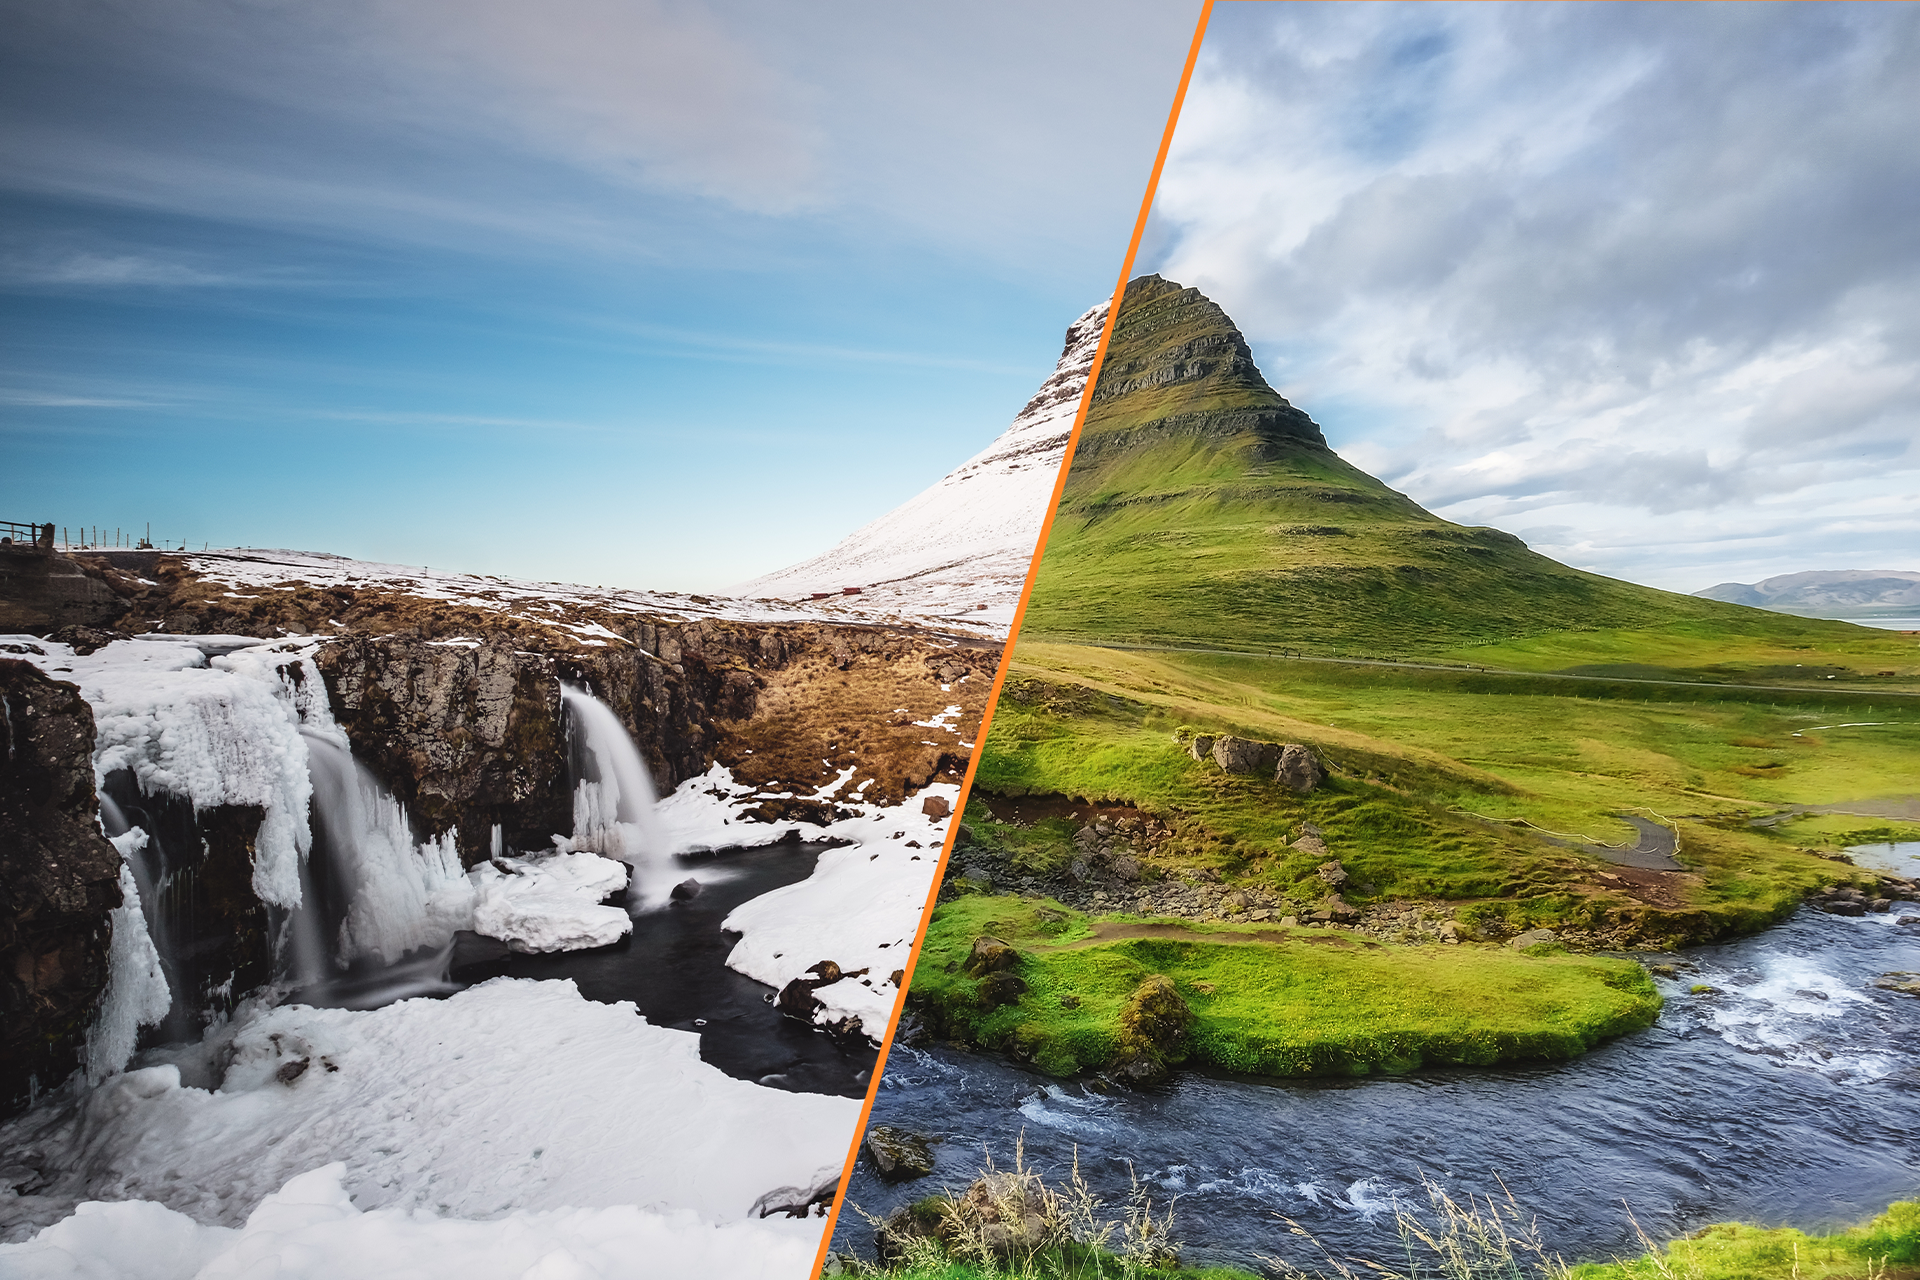 Perfect mirror image of mt kirkjufell and kirkjufellsfoss waterfall in Iceland during different seasons